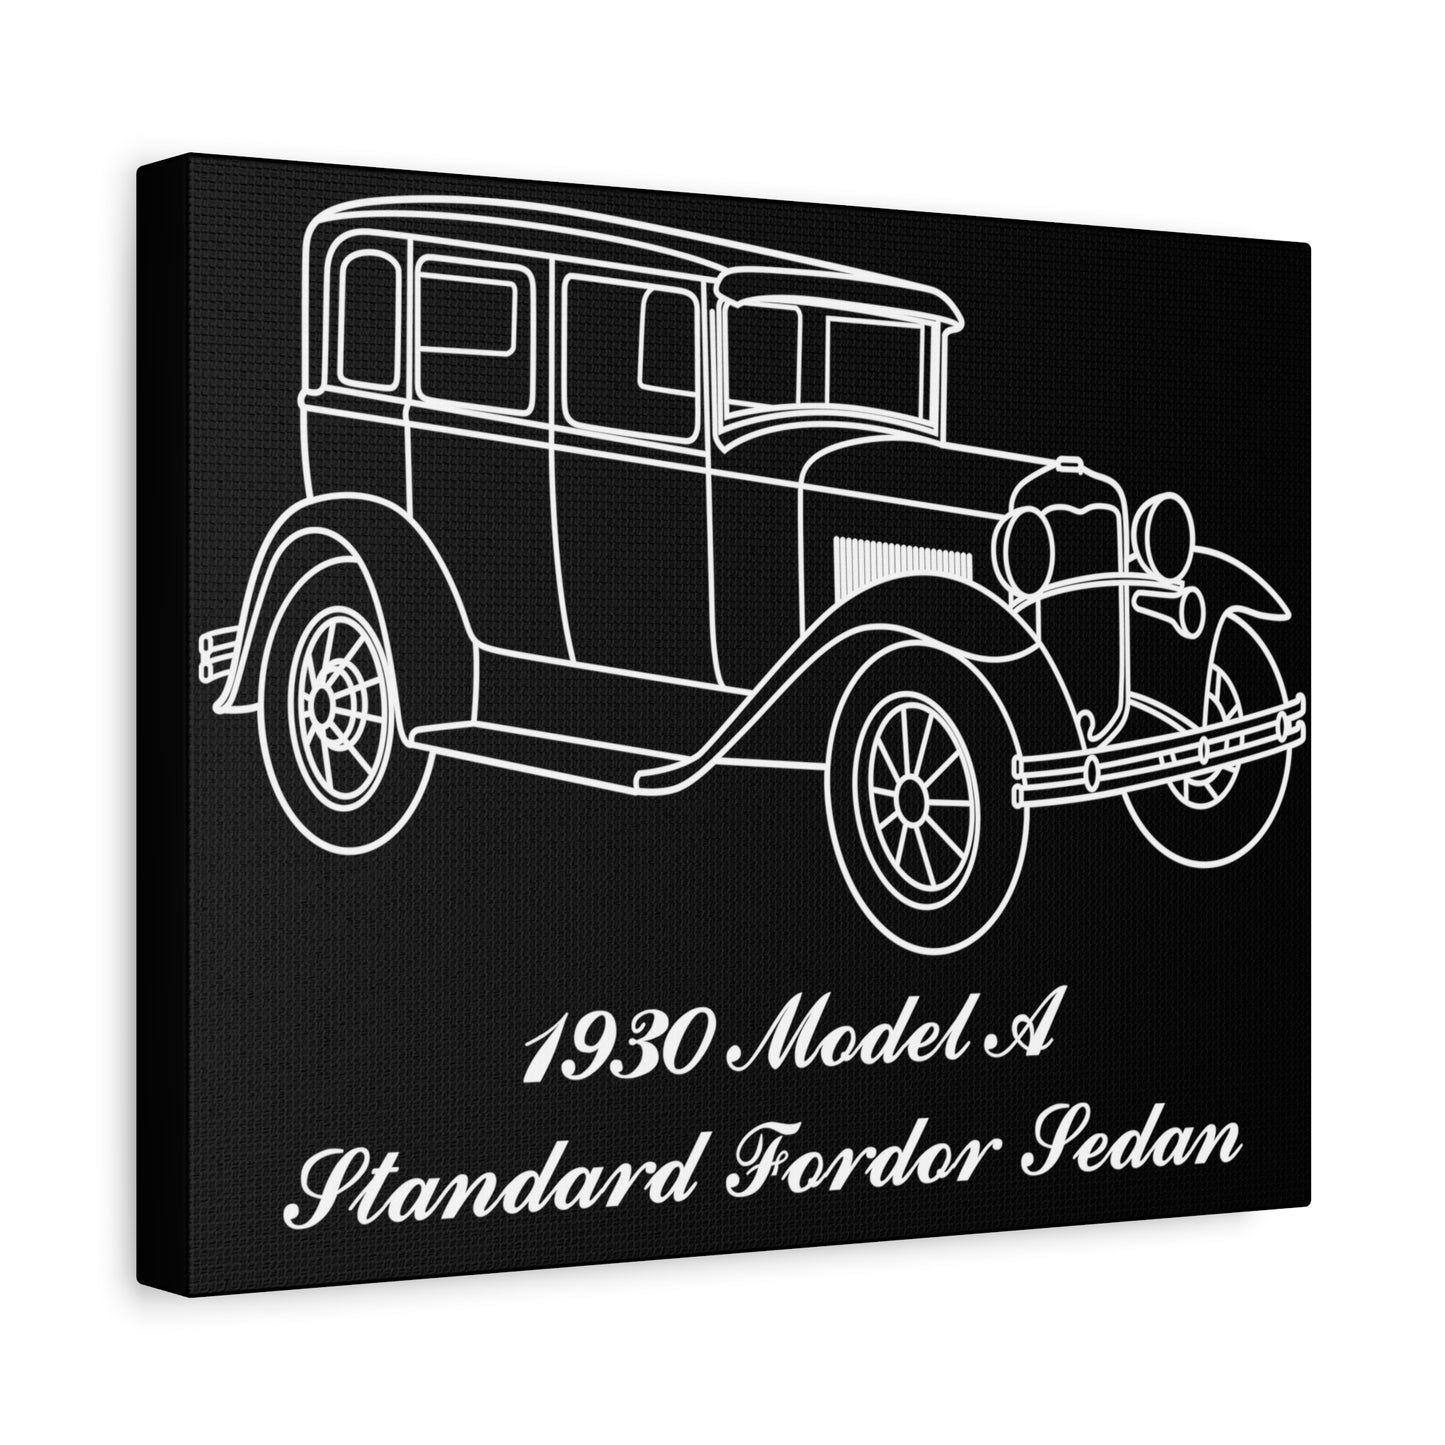 1930 Standard Fordor Sedan Black Canvas Wall Art